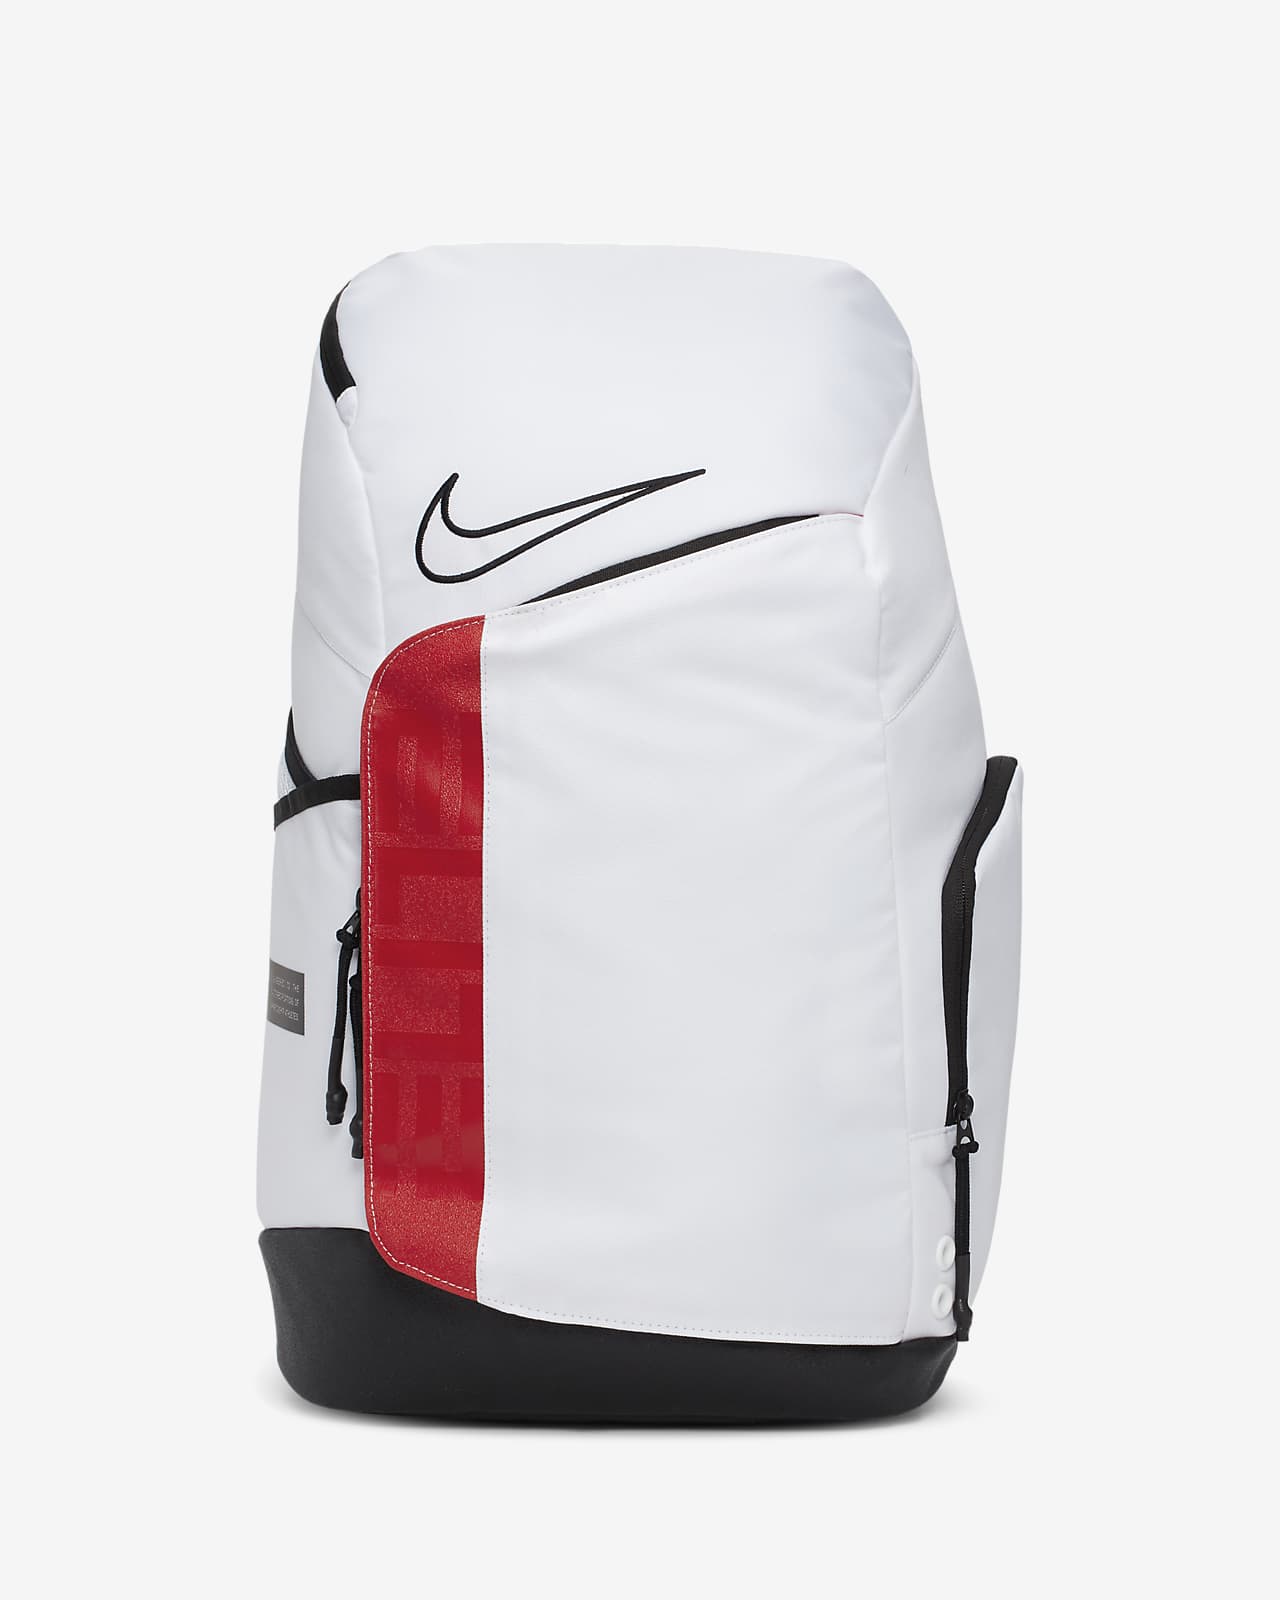 Nike Elite Pro Basketball Backpack (32L)